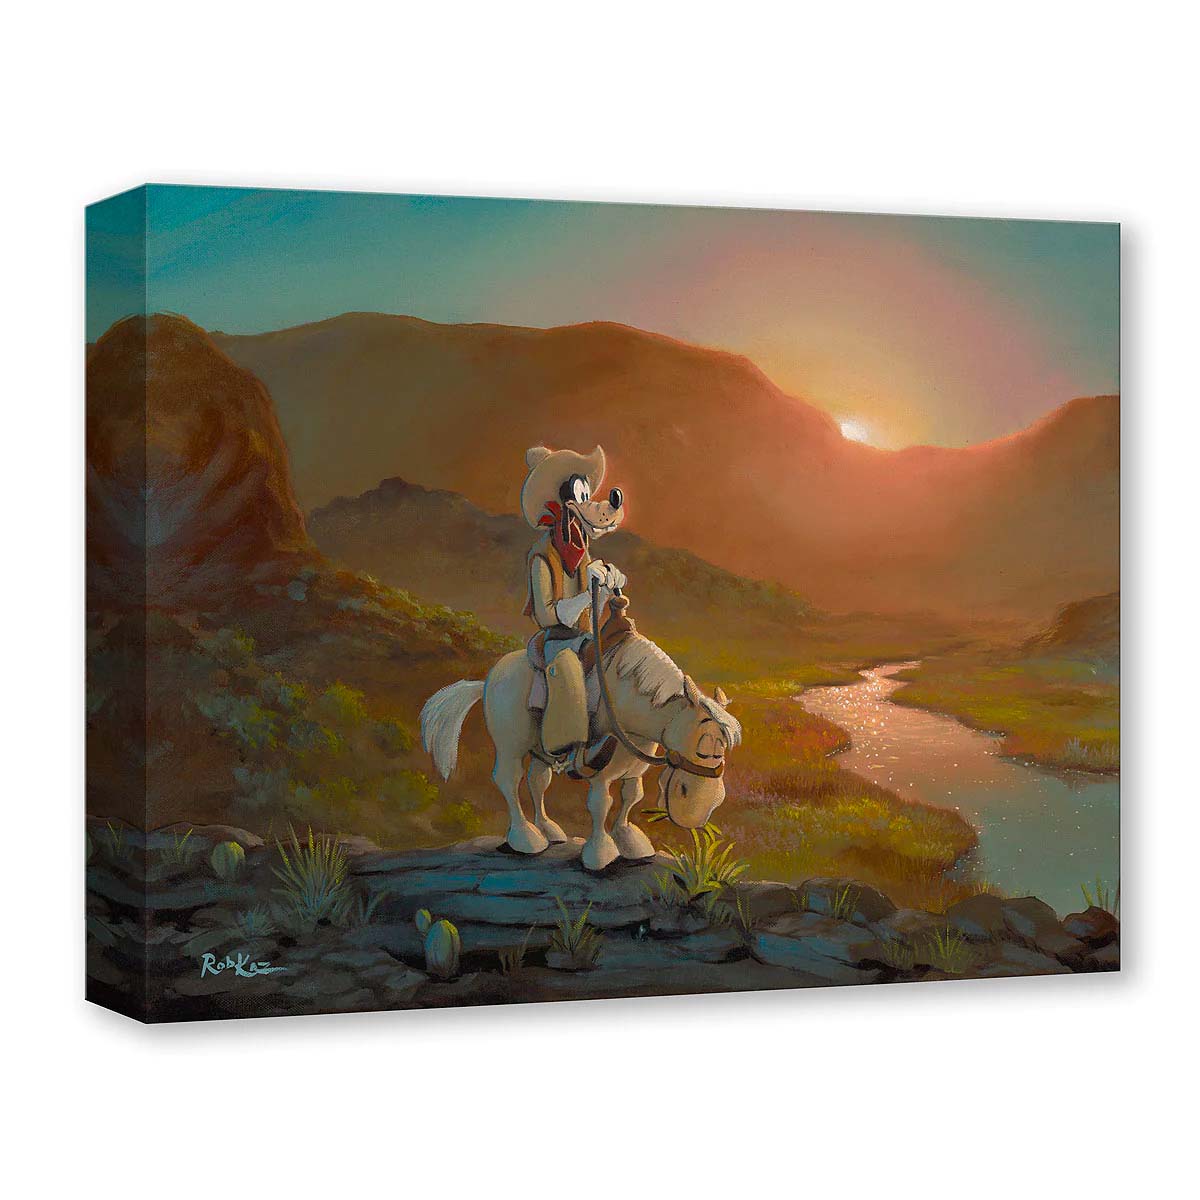 Rob Kaz Disney "On the Range" Limited Edition Canvas Giclee